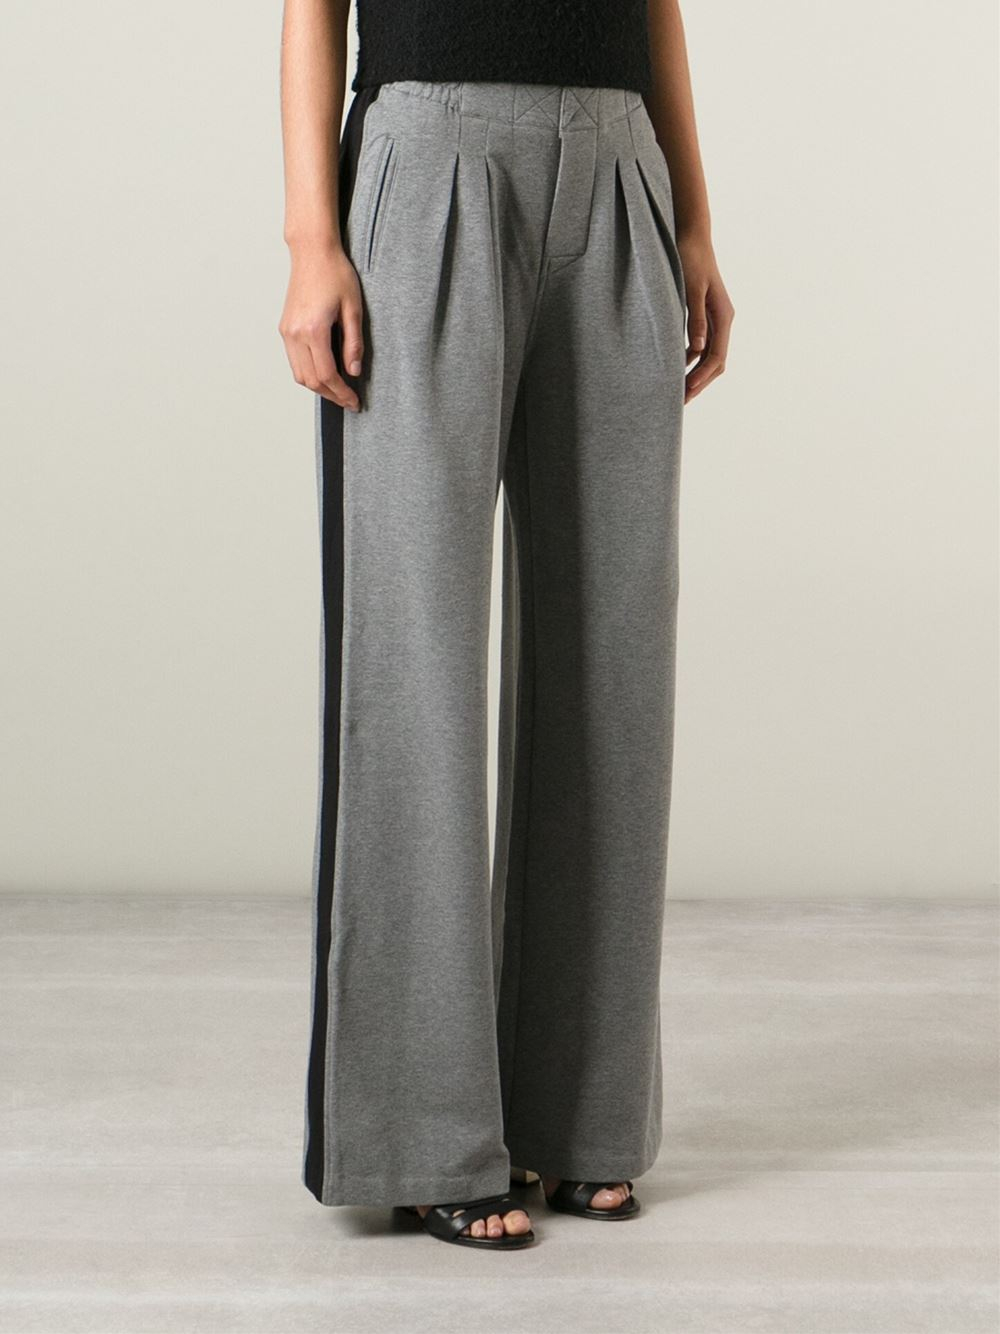 Norma kamali Wide Leg Track Pants in Gray (grey) | Lyst